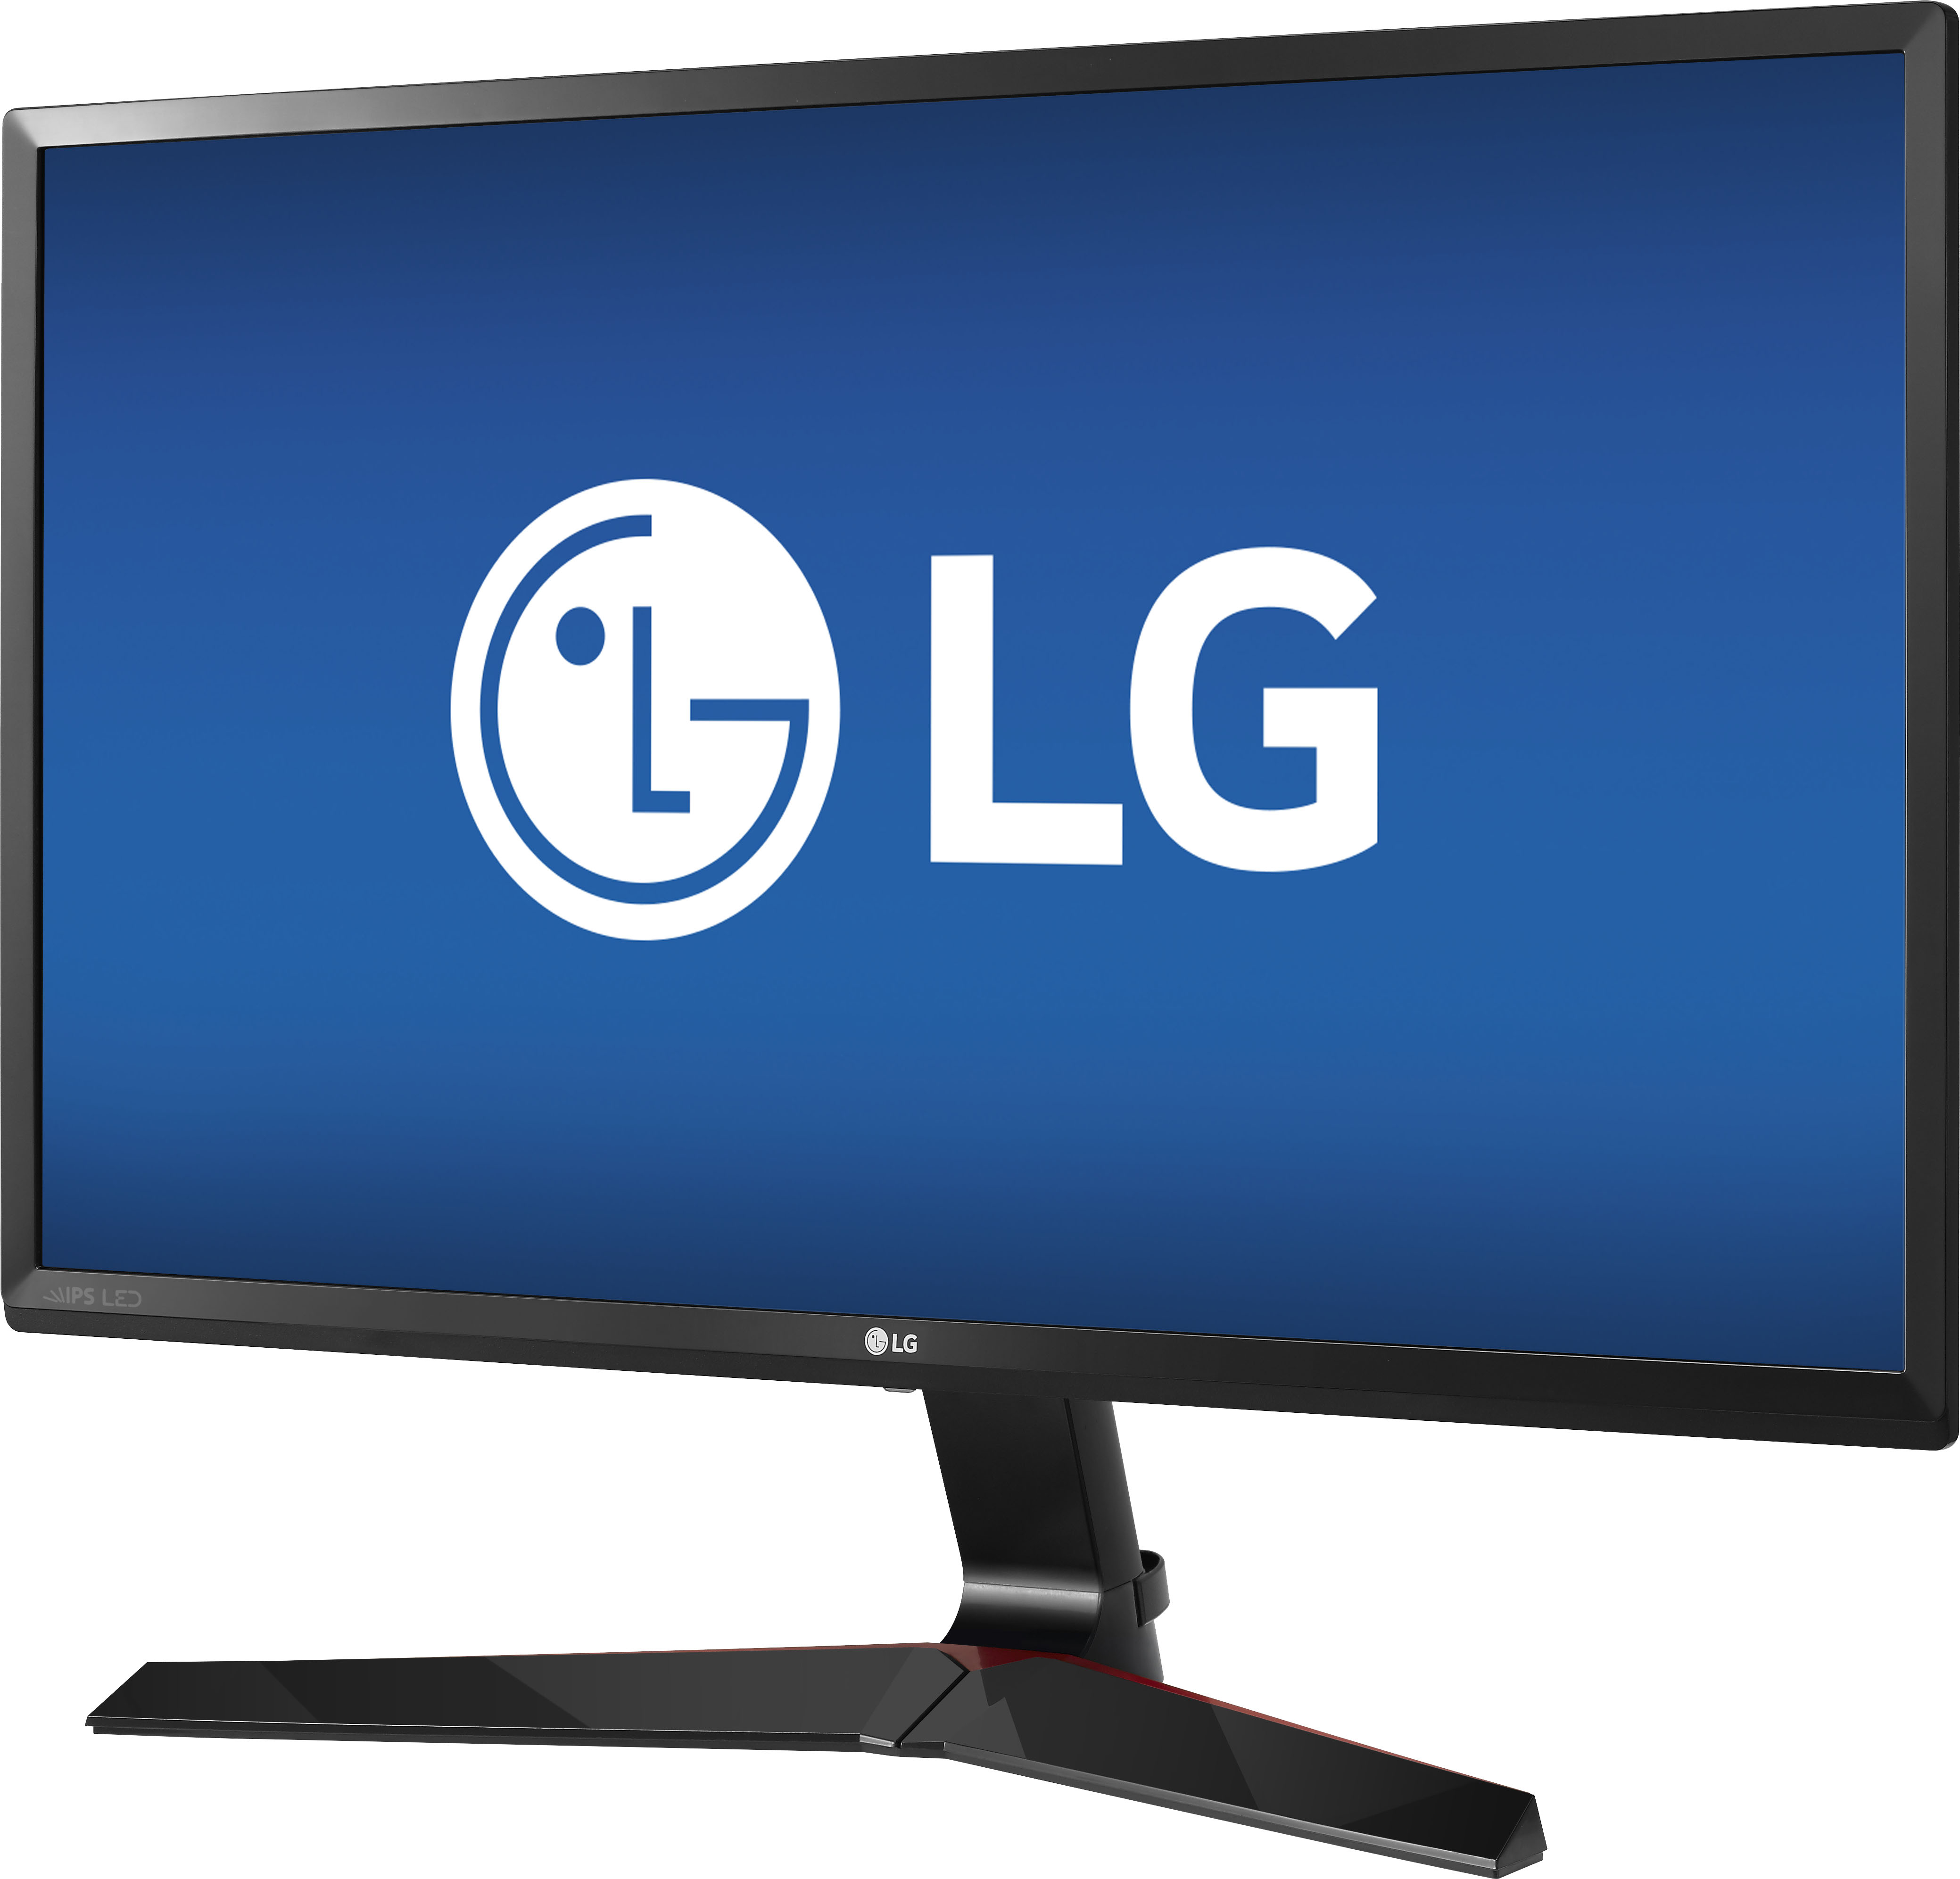 Left View: LG - 27" IPS LED FHD FreeSync Monitor (HDMI, Display Port) - Black